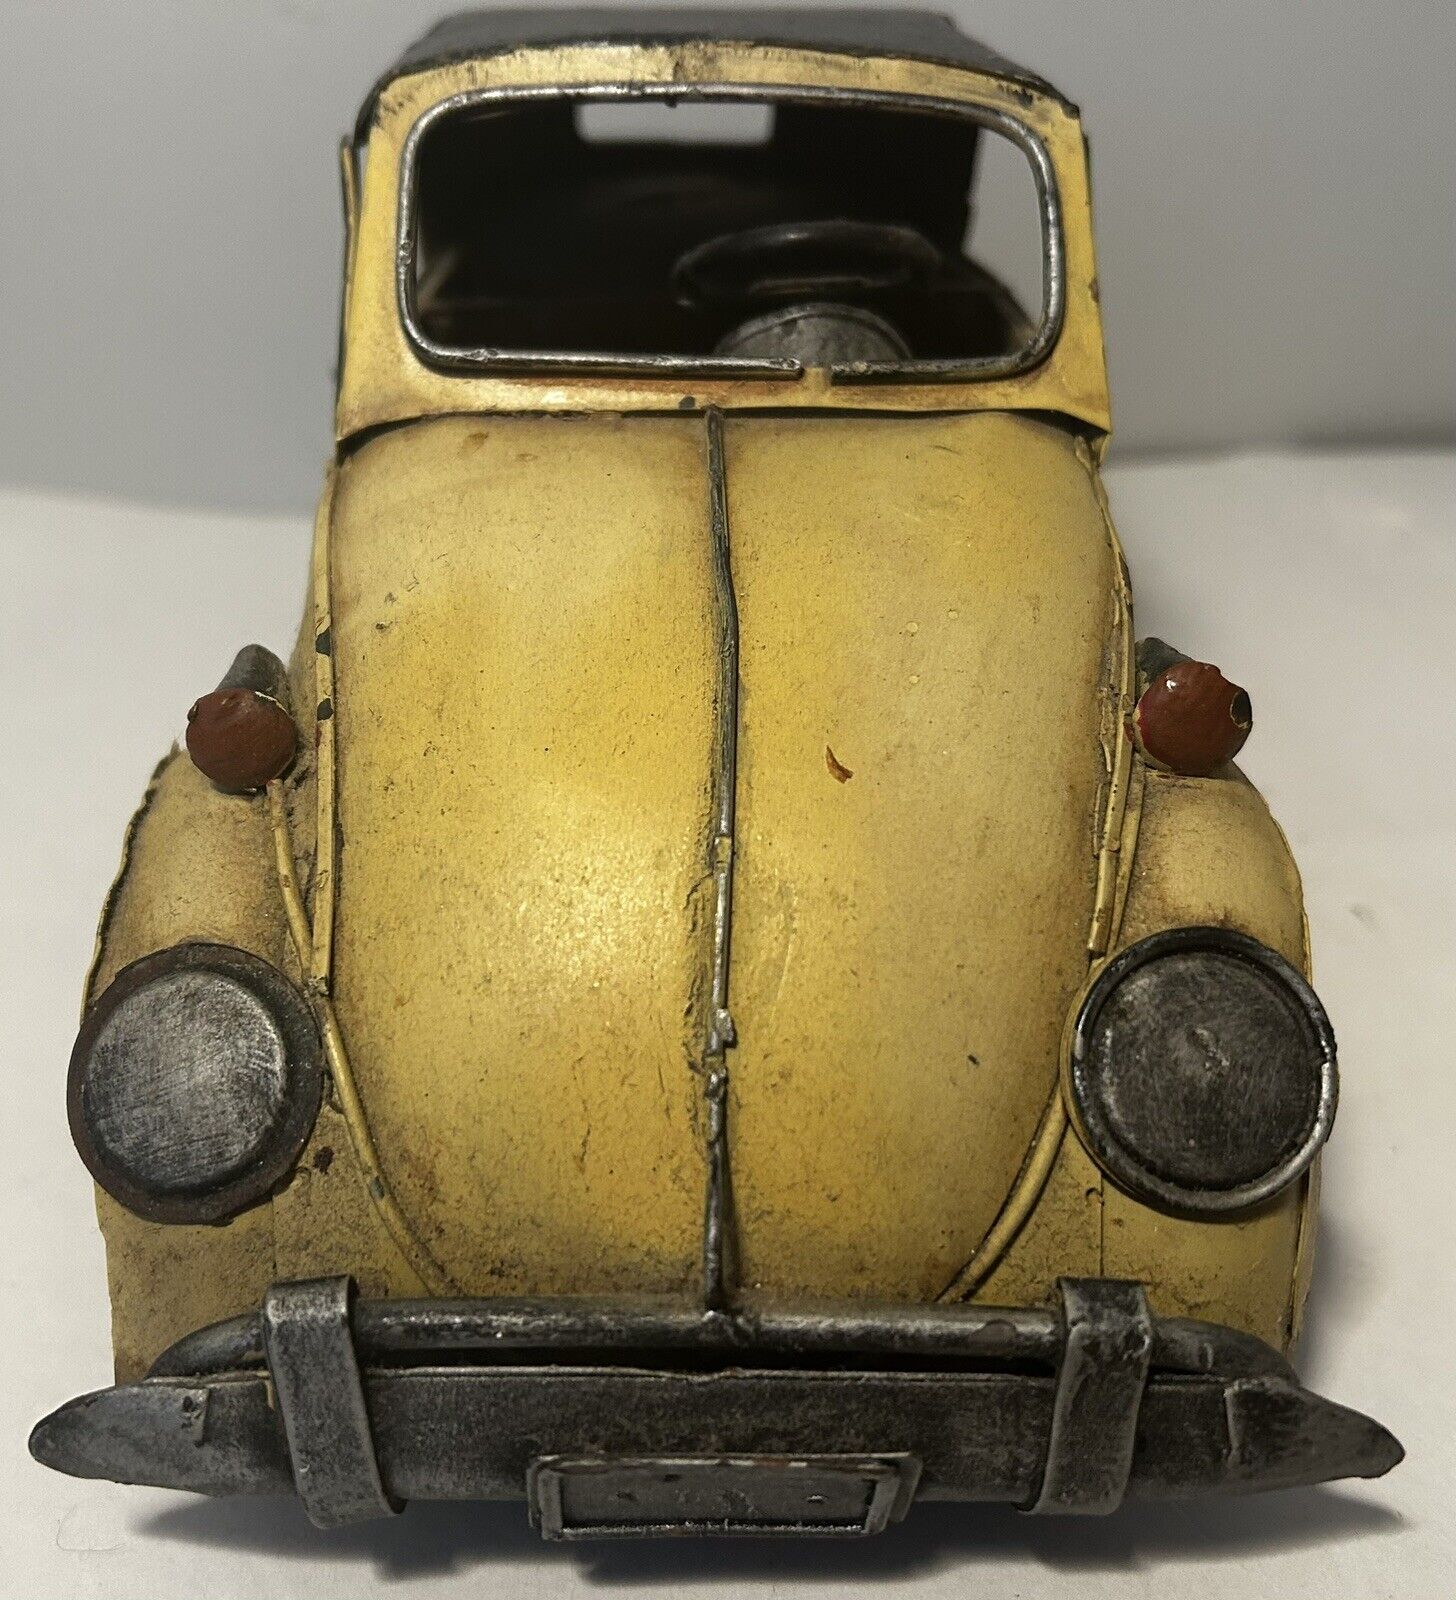 Voltzwagen VW Beetle Bug Model Car Metal Vintage Style Replica.